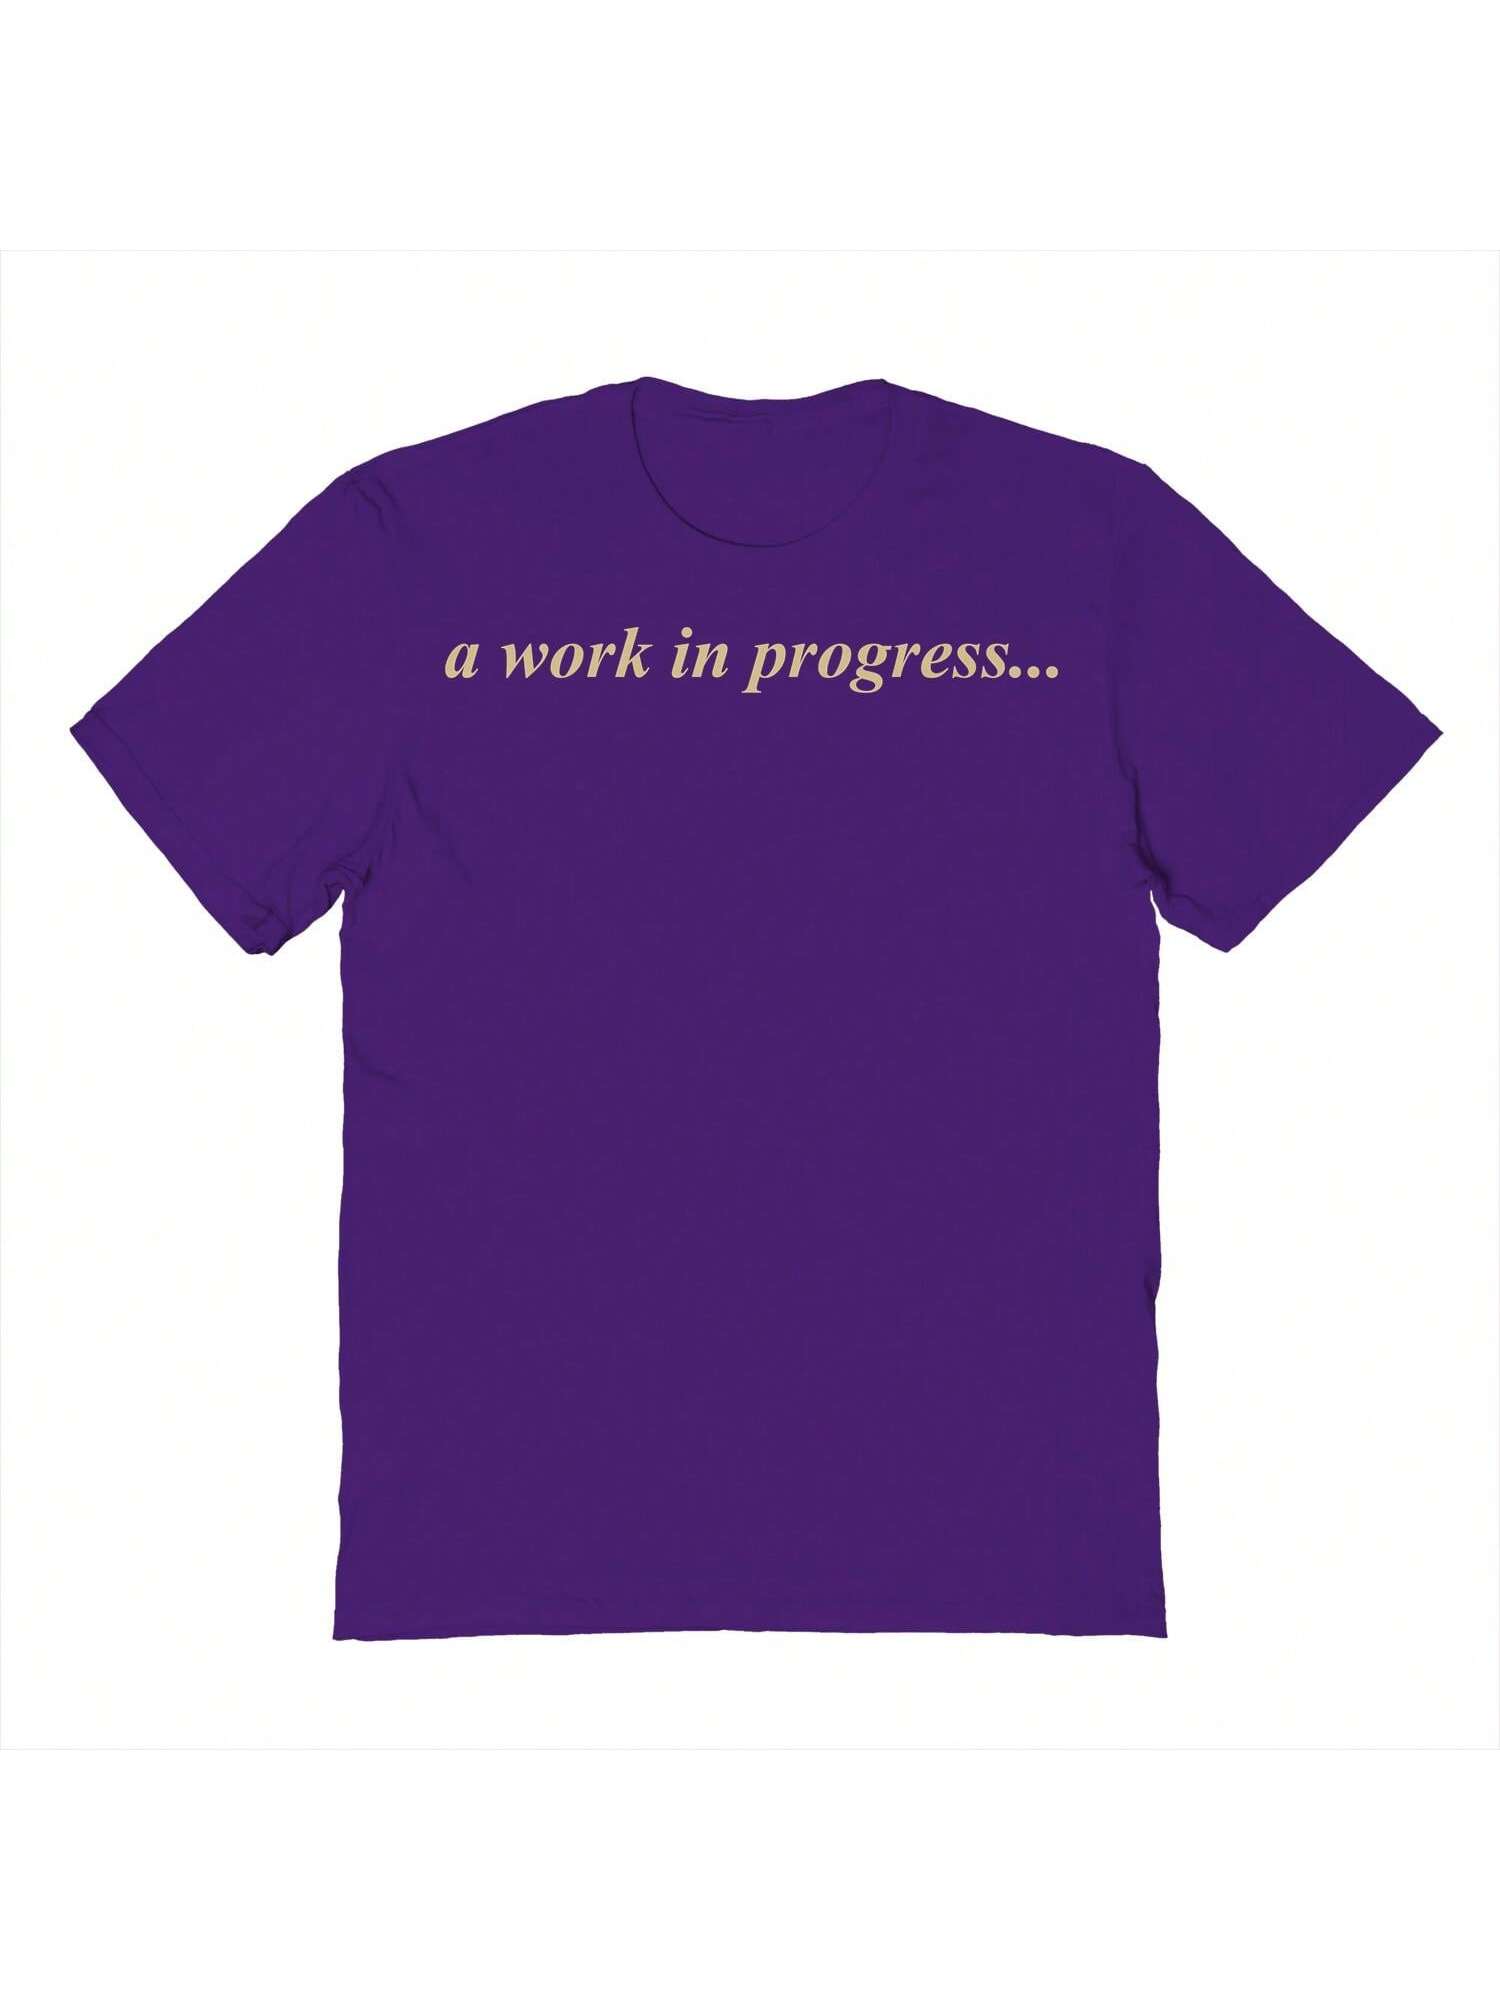 Хлопковая футболка унисекс с короткими рукавами Nearly There WIP с графикой, фиолетовый